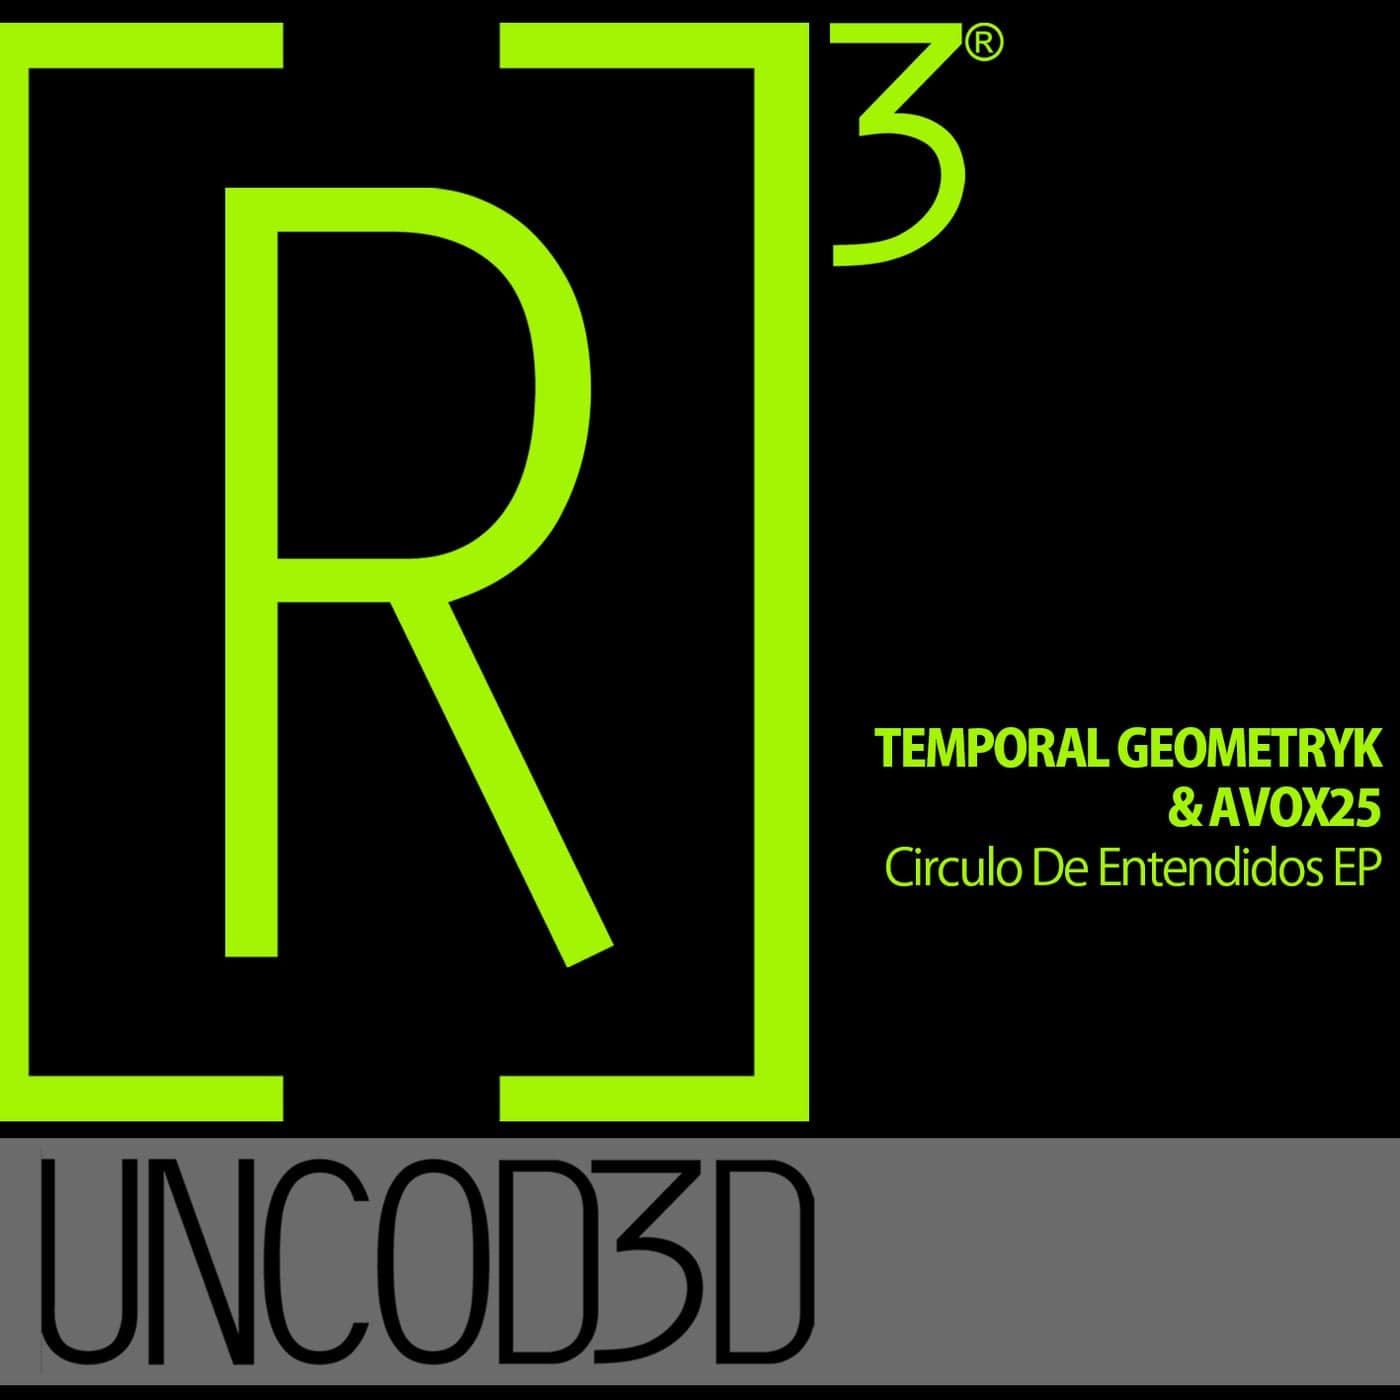 image cover: Avox25, Temporal Geometryk - Circulo De Entendidos EP / R3UD035